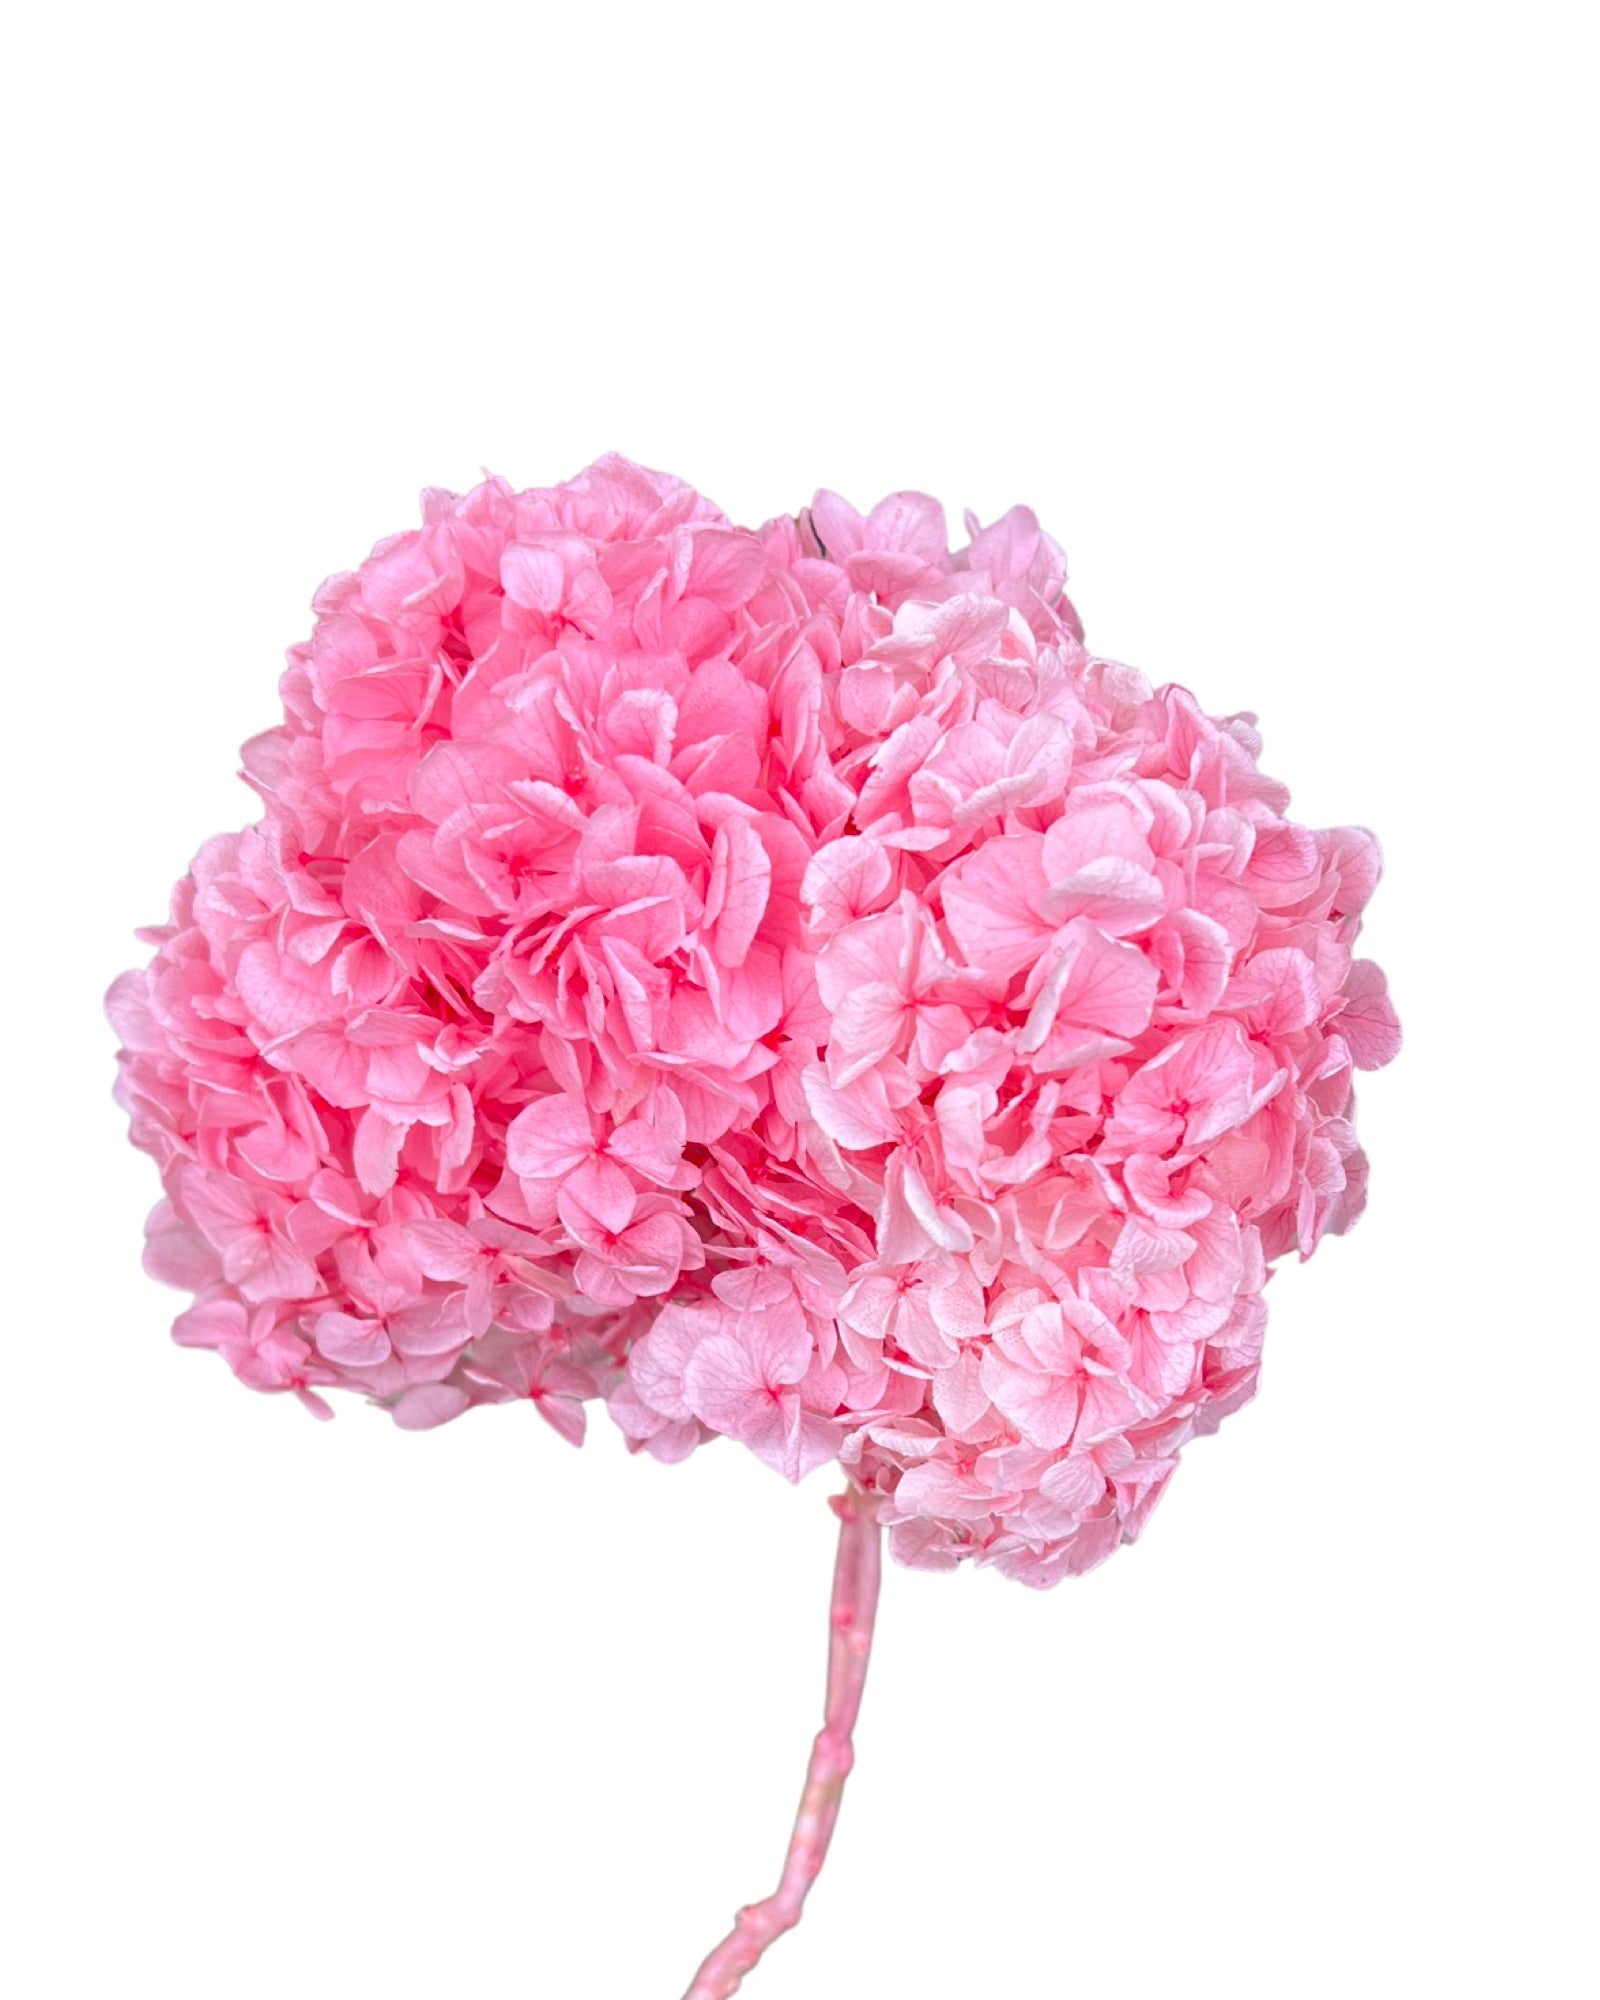 Hydrangeas spp. (big petals) - Blushing ballerina